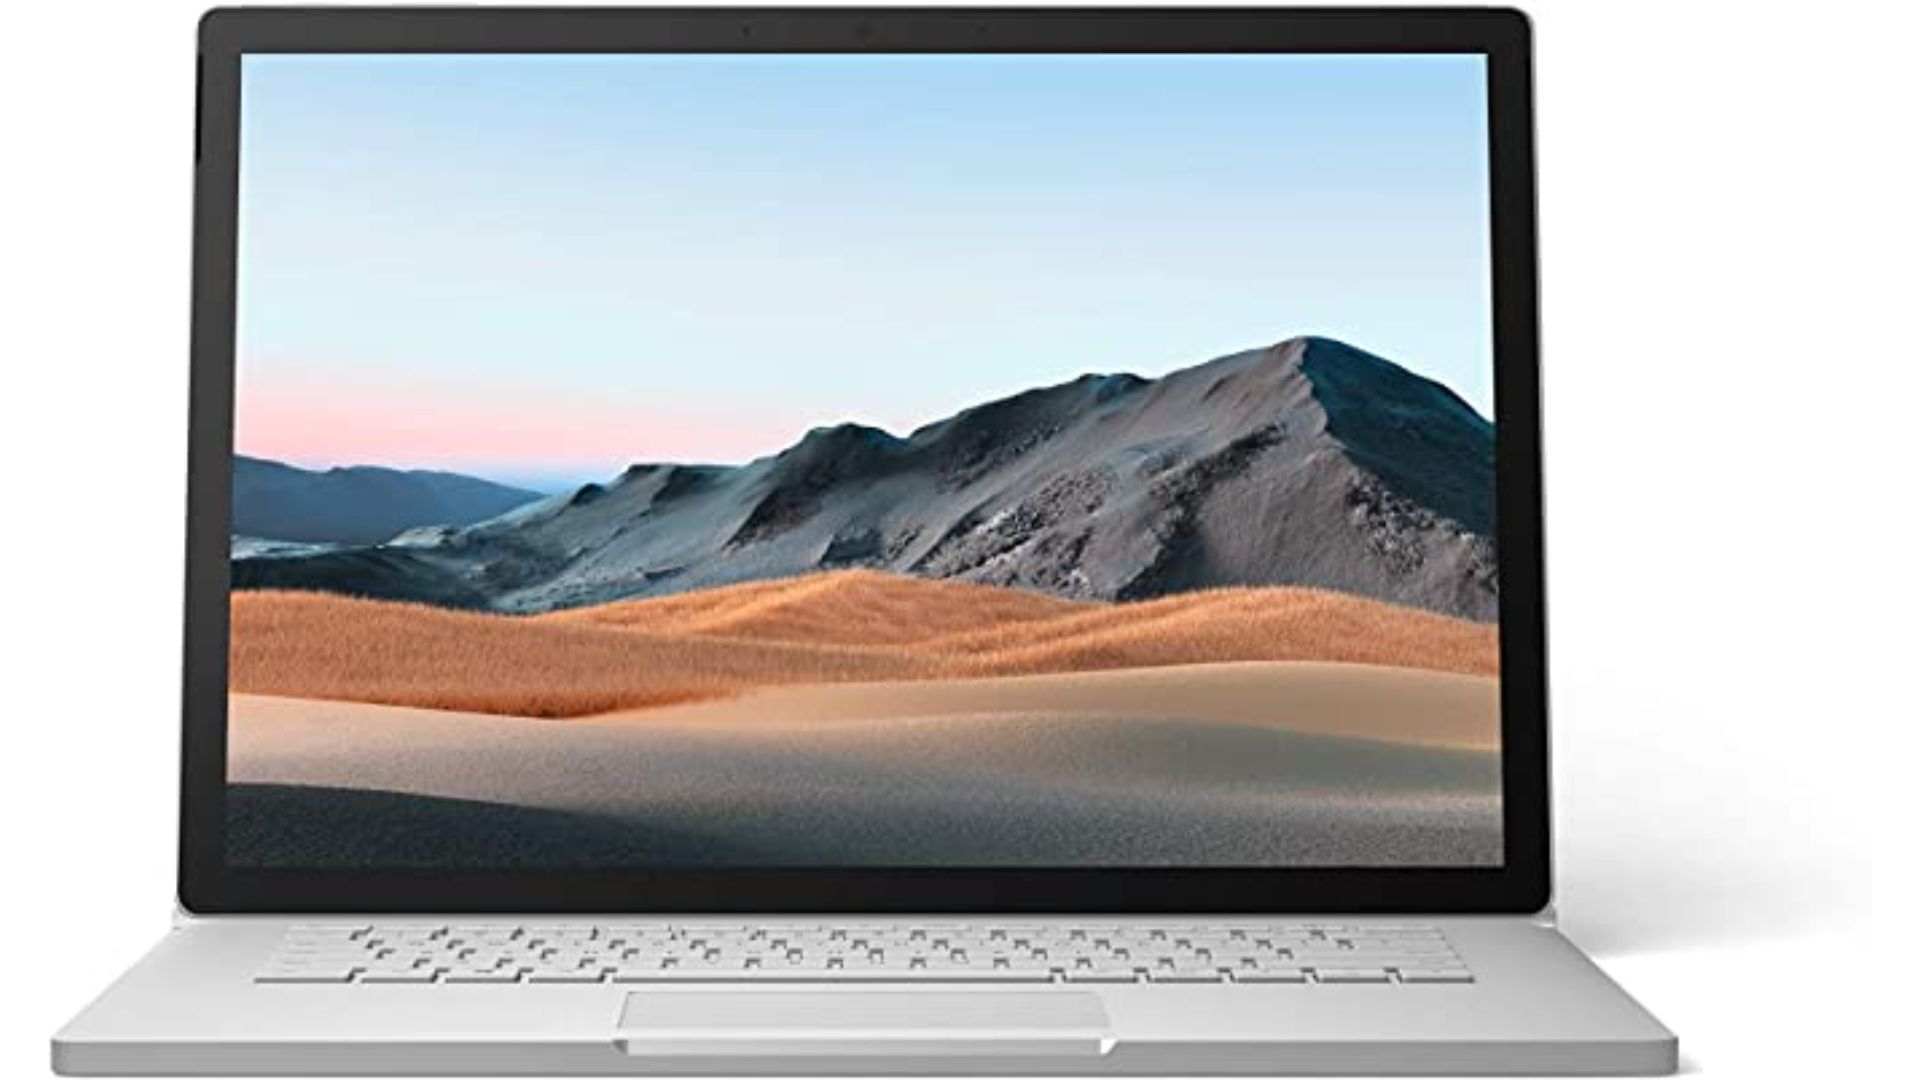 Microsoft Surface Book 3 - Best 2-in-1 Microsoft laptop for digital art 